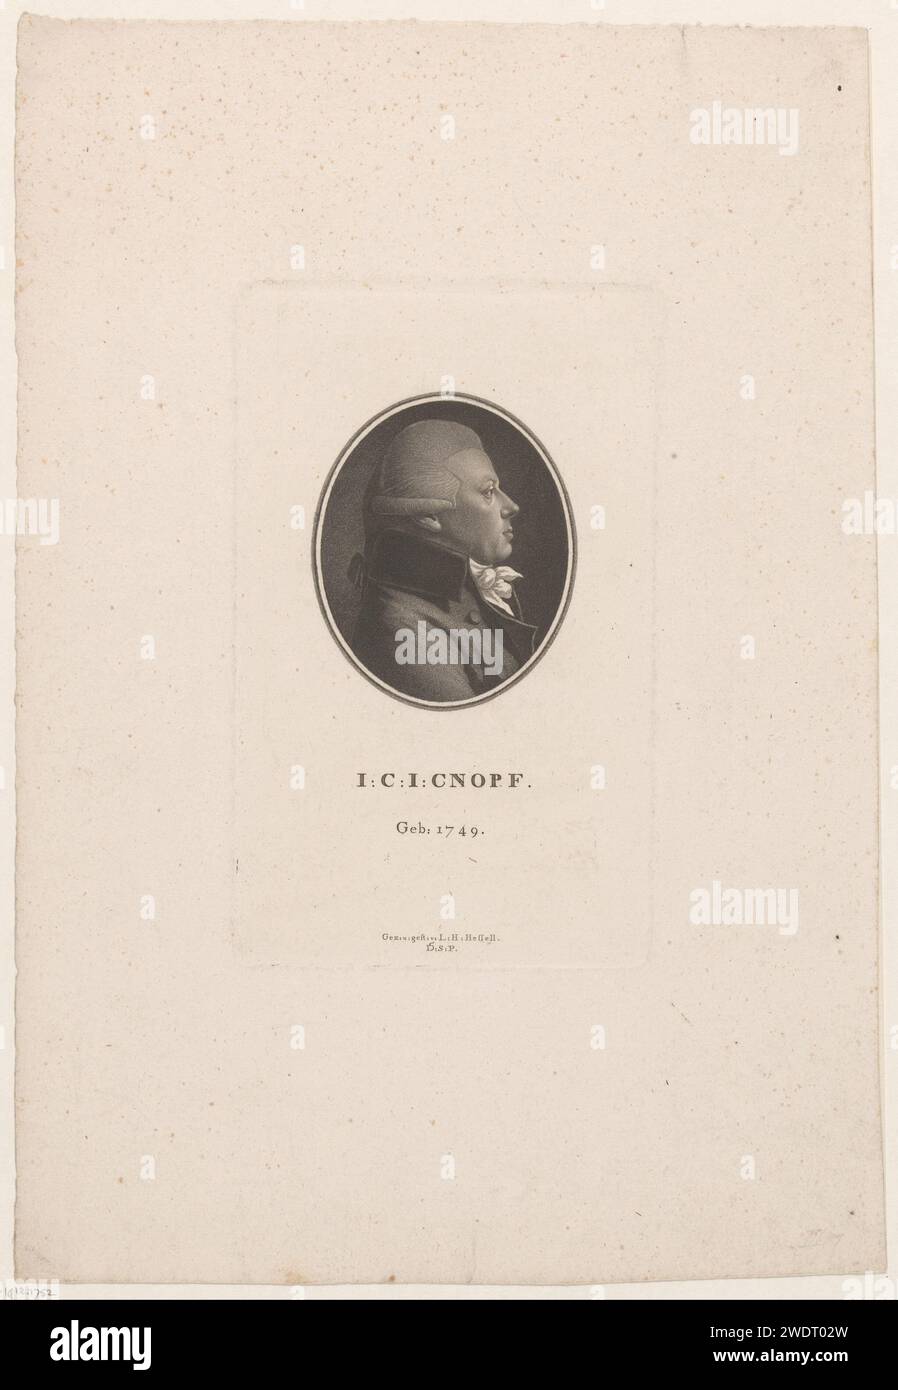 Portrait van Johann Christoph Jacob Cnopf, Leonhard Heinrich Hessell, 1767 - 1830 print   paper  historical persons Stock Photo